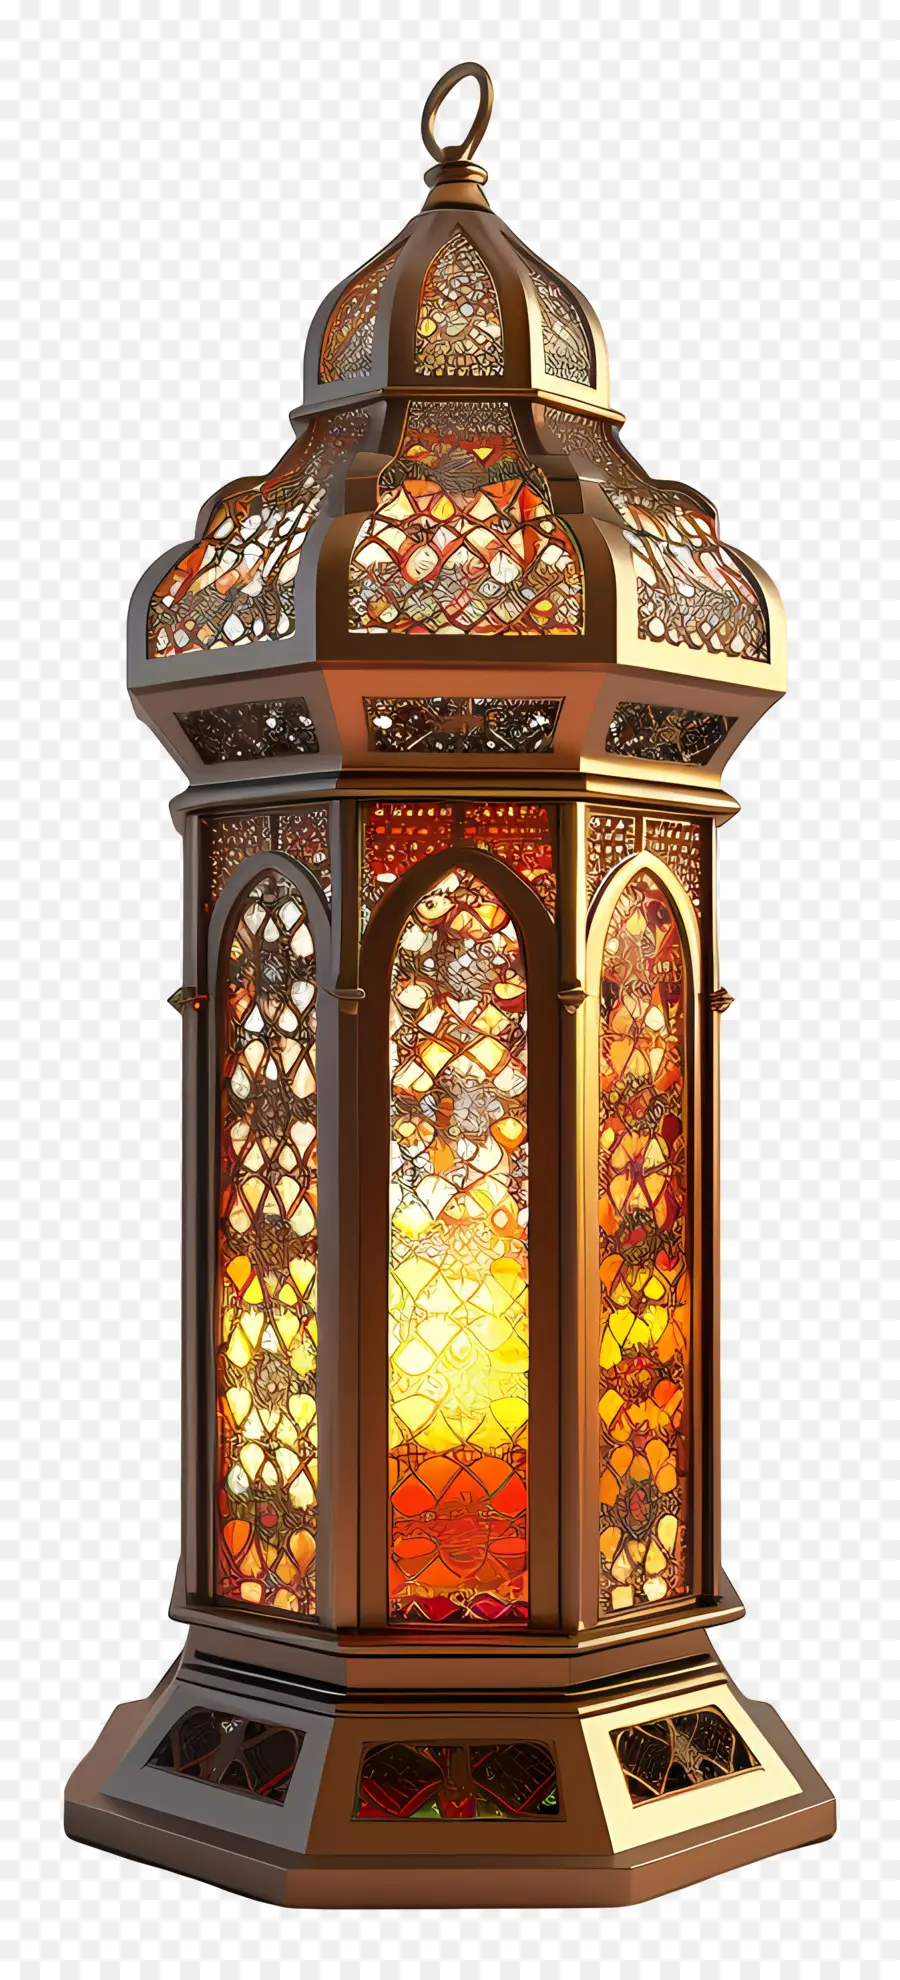 O Ramadã Lanterna，Lanterna Ornamentada PNG